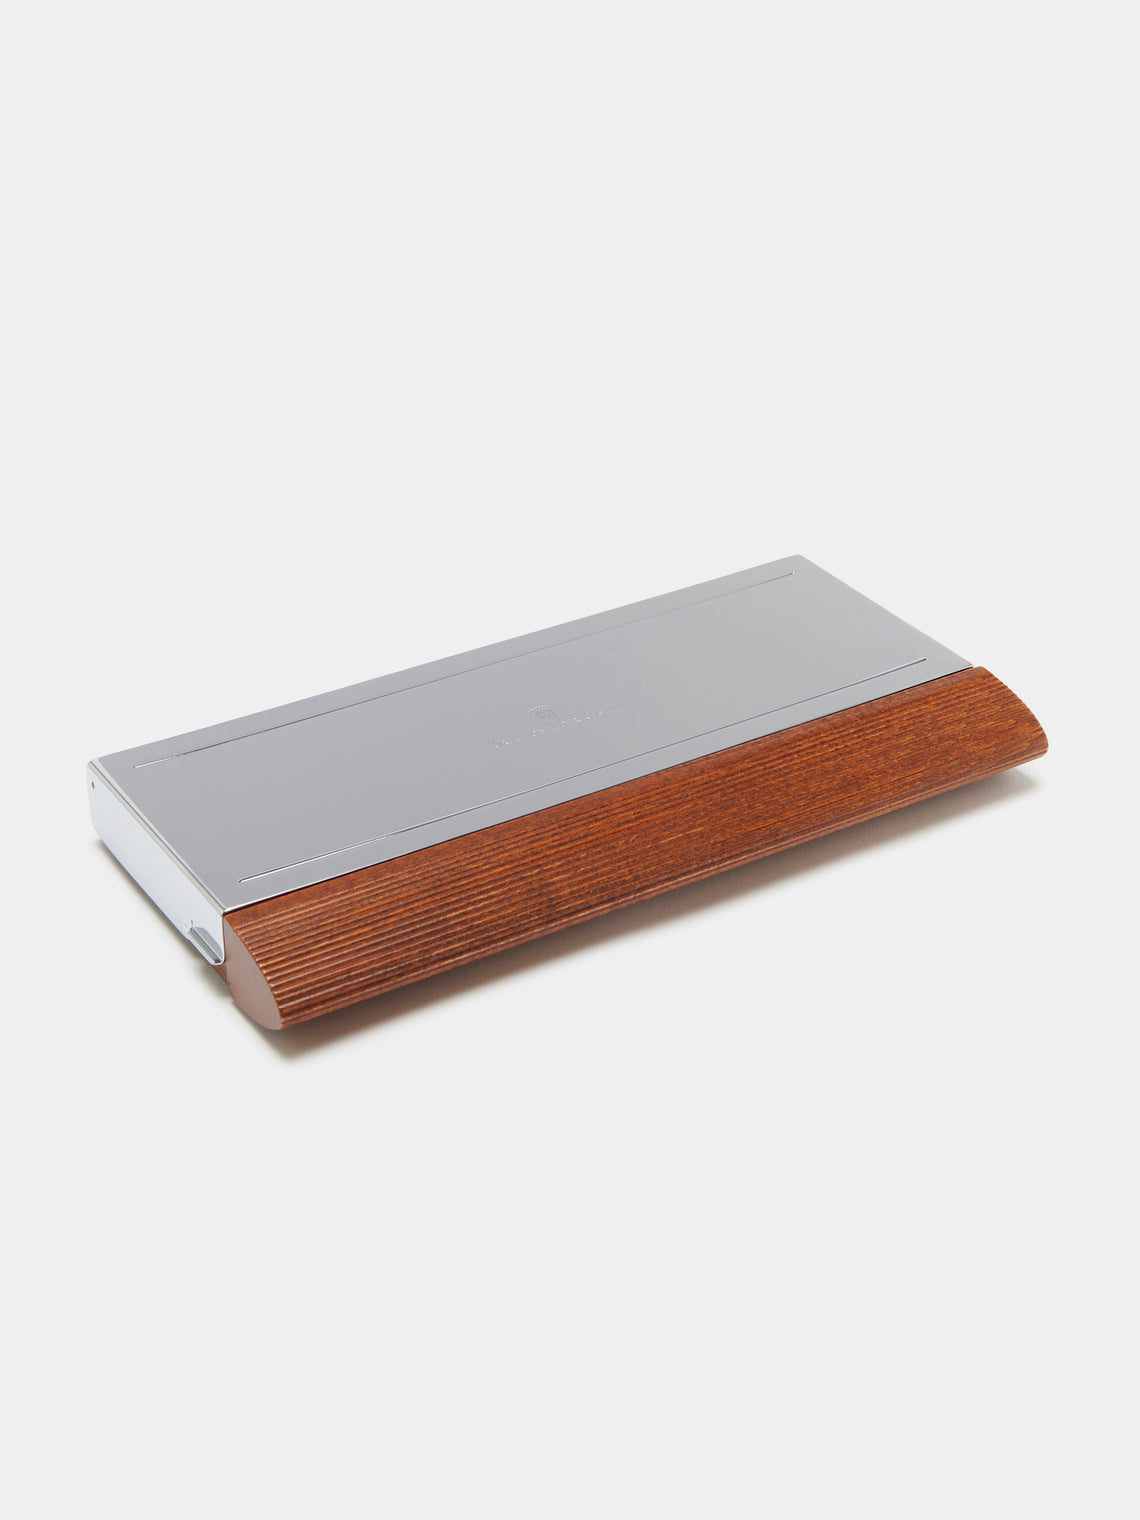 Graf von Faber-Castell - Platinum-Plated Perfect Pencil Desk Set - Brown - ABASK